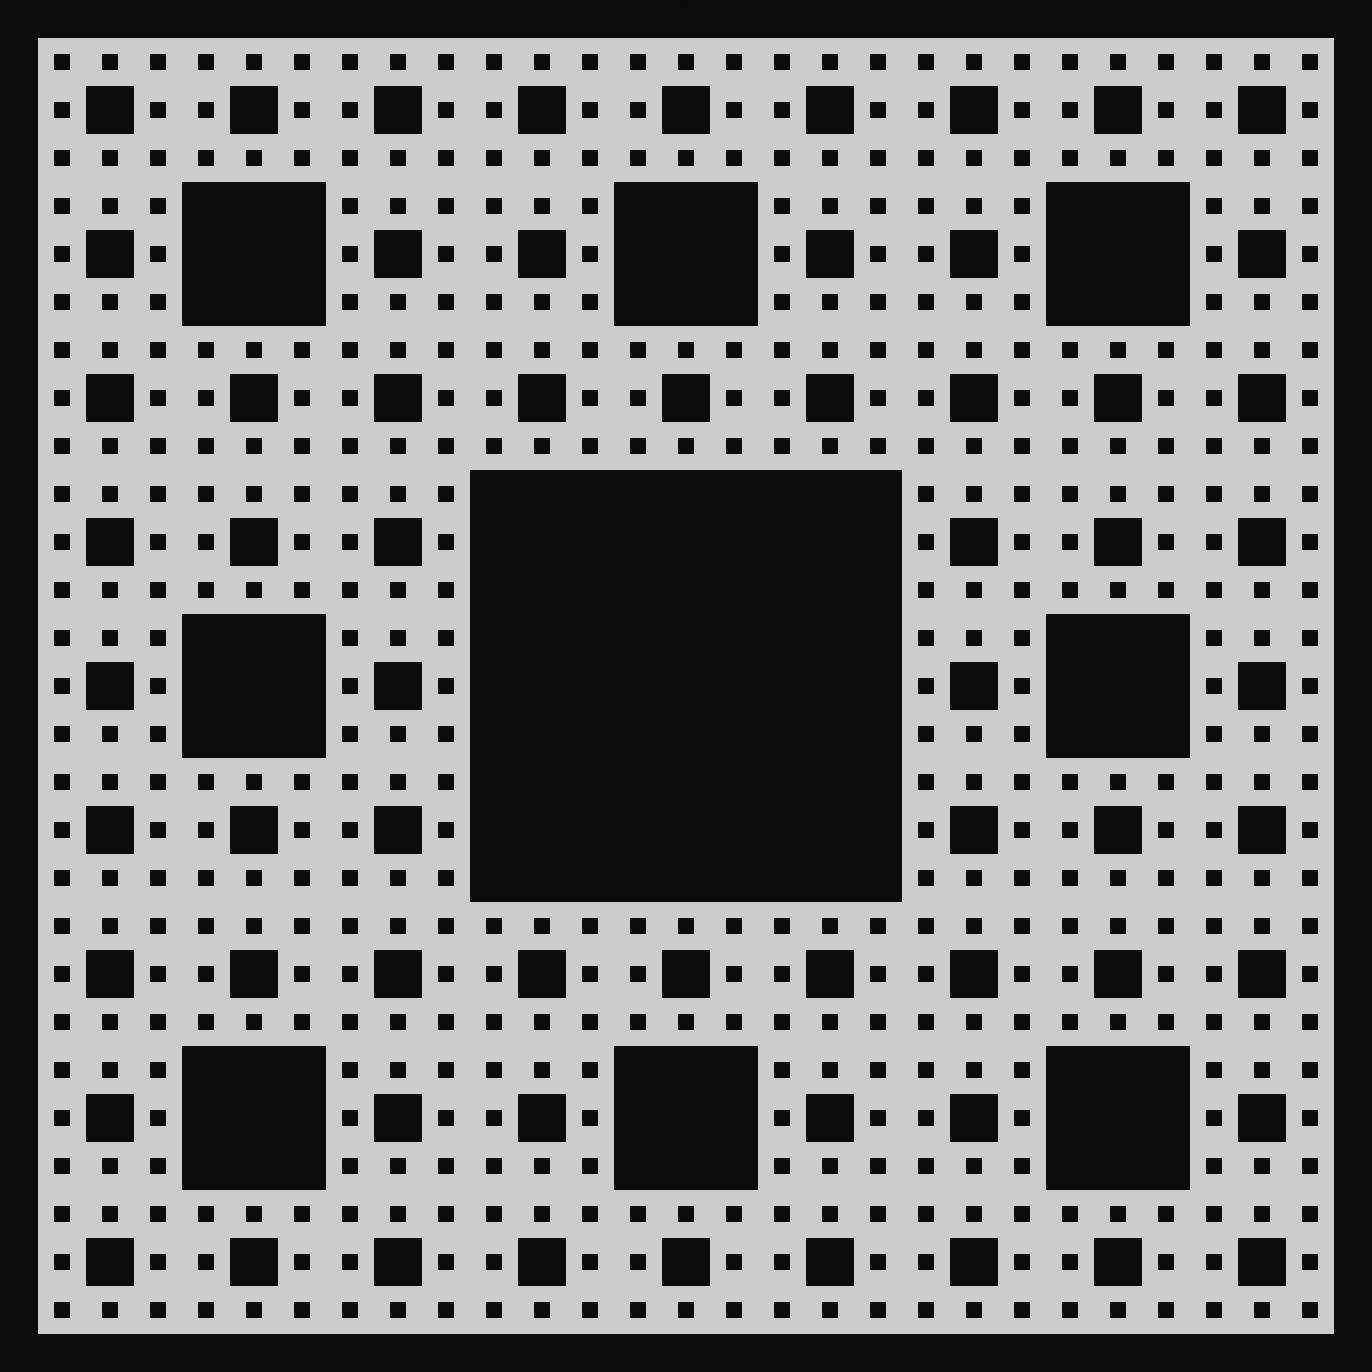 What sierpinski-carpet-cli prints to the console